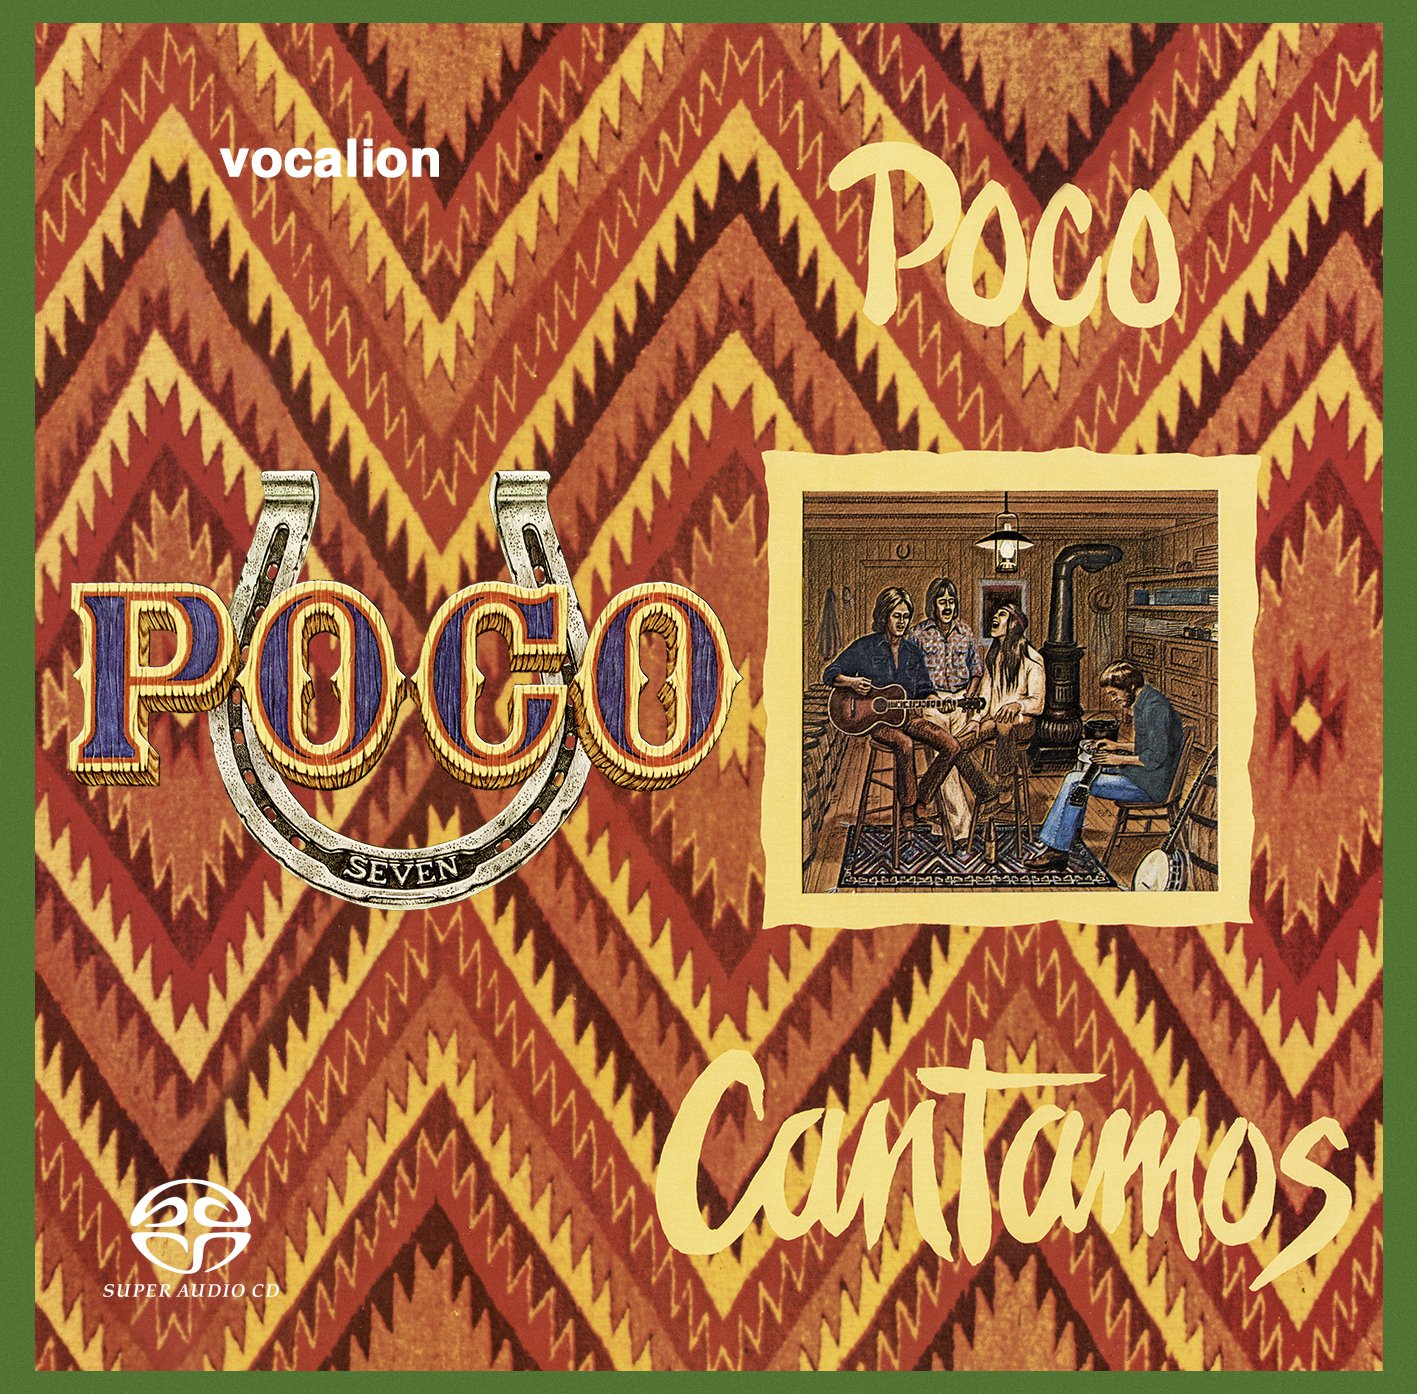 Poco - Cantamos & Seven (1974) [Reissue 2018] SACD ISO + FLAC 24bit/96kHz